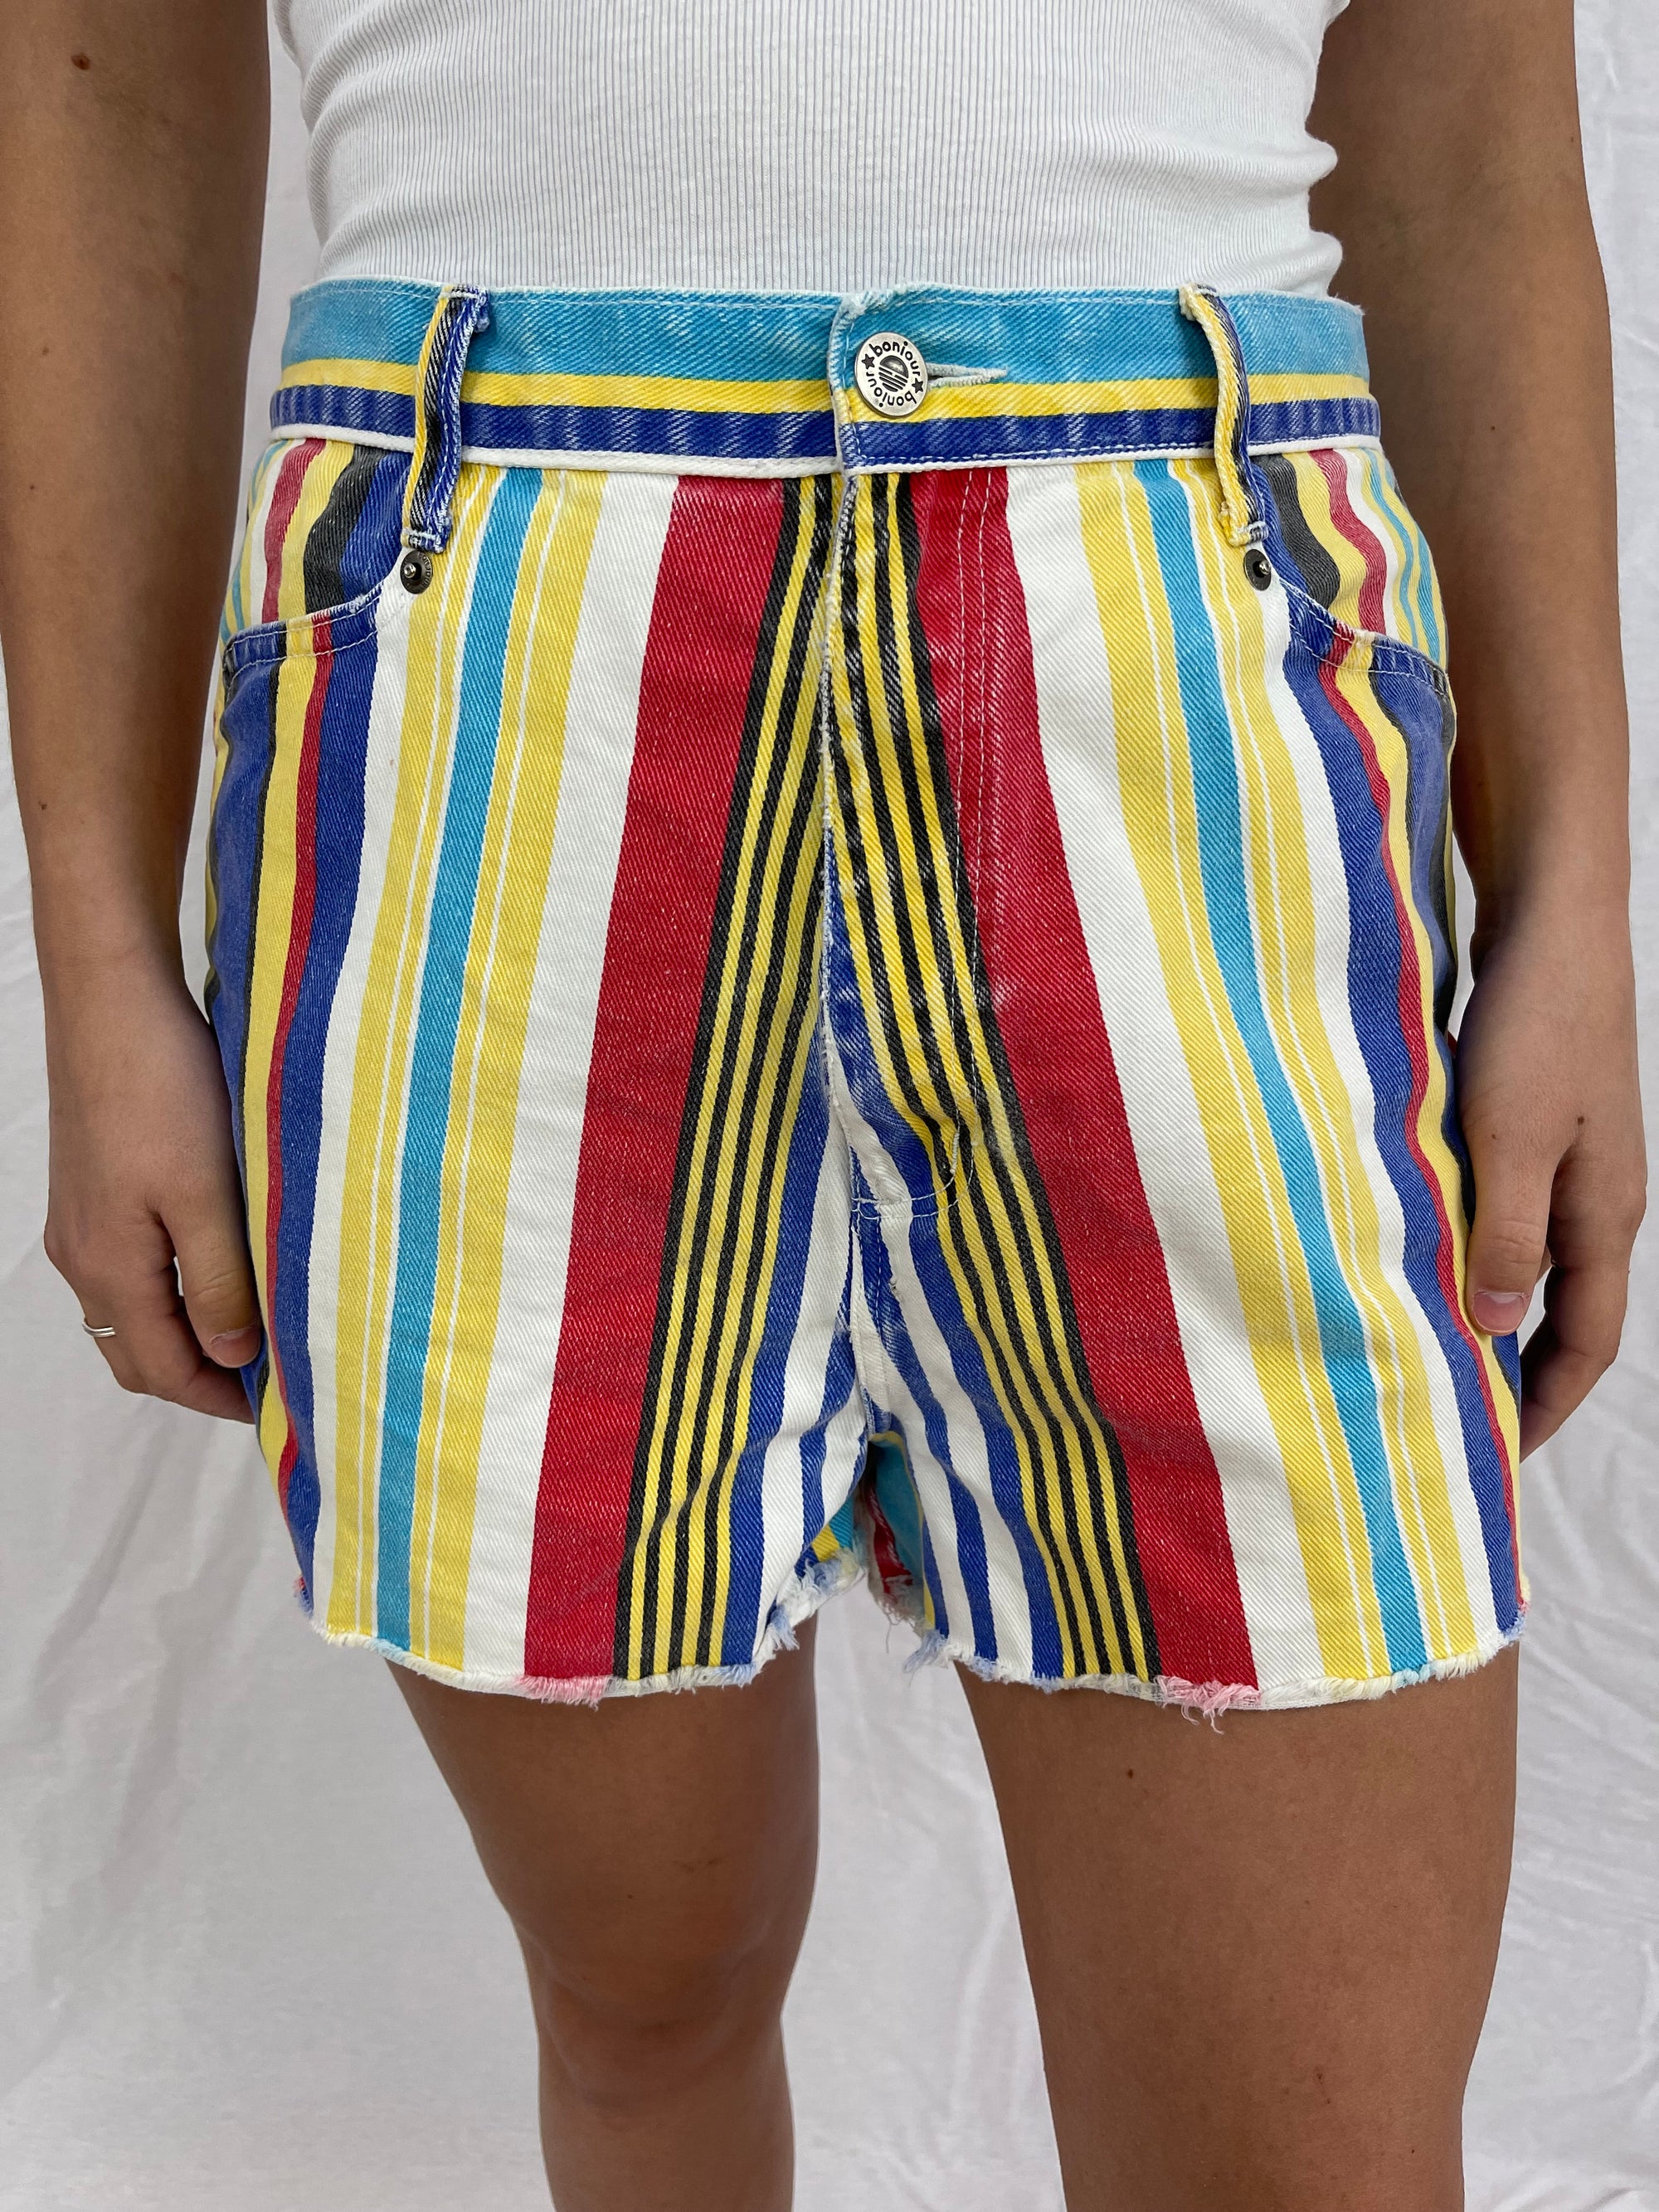 Vintage Bonjour Multicolor Striped Denim Shorts size 13/14